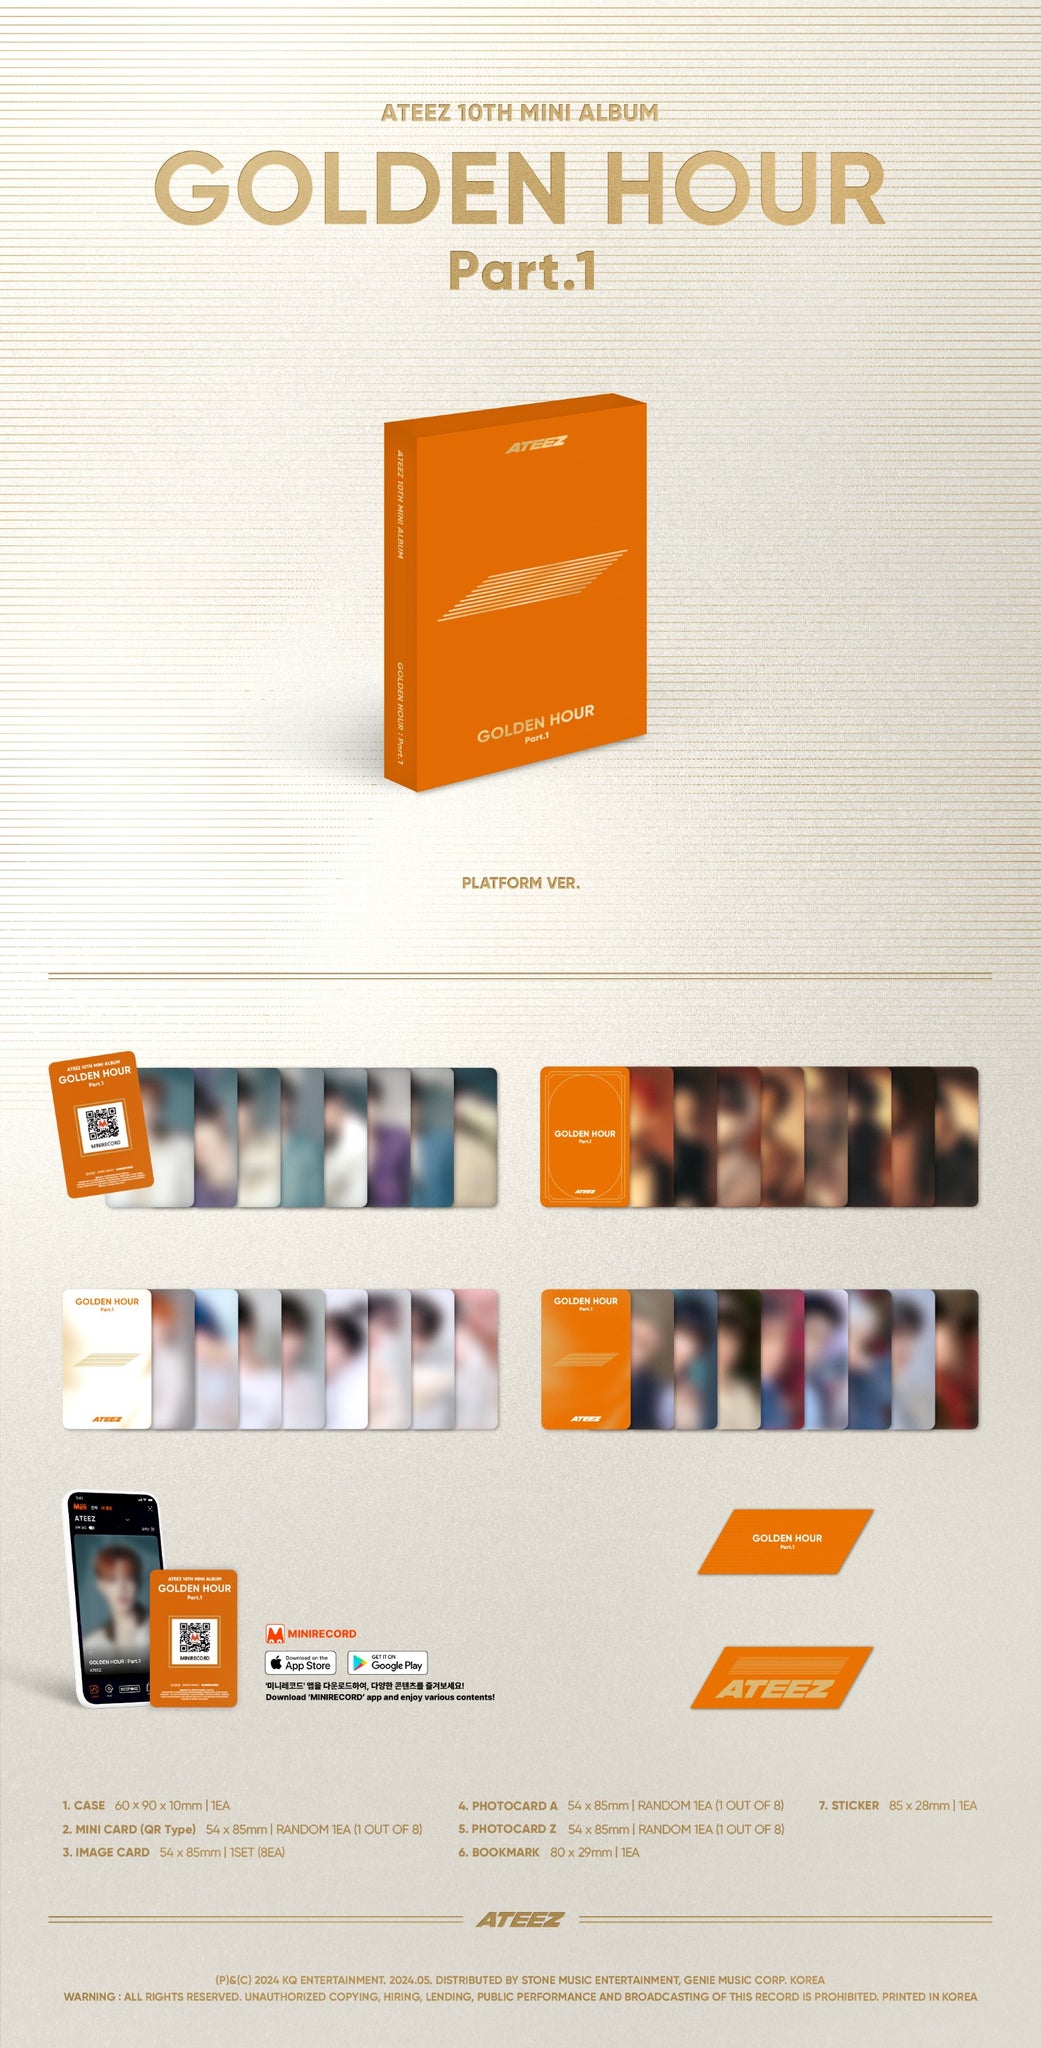 ATEEZ 10th Mini Album GOLDEN HOUR : Part.1 - Platform Version Inclusions: Case, Mini Card (QR Type), Image Card Set, Photocard A, Photocard Z, Bookmark, Sticker